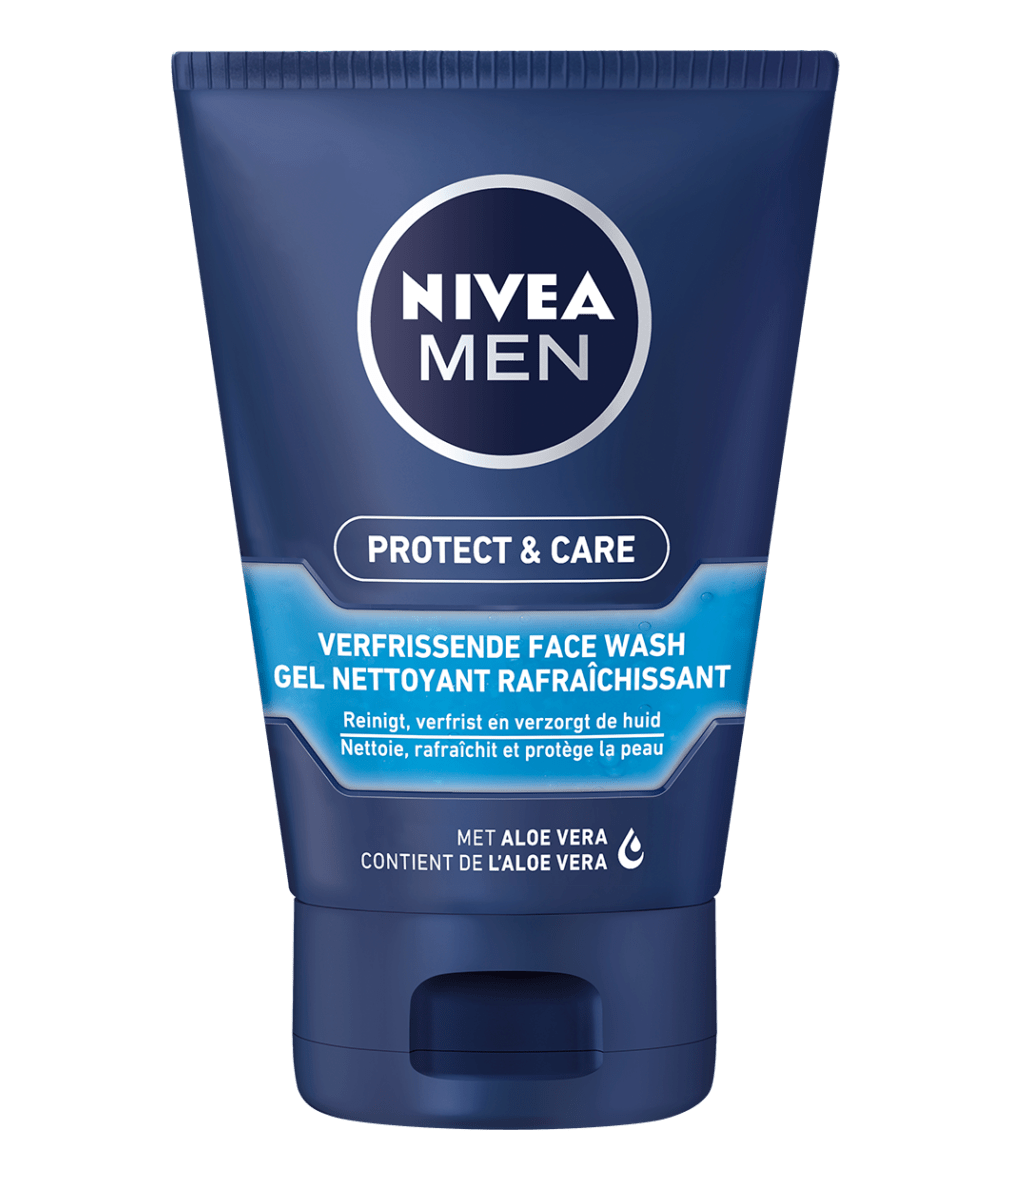 Geneeskunde magie Vliegveld Protect & Care Verfrissende Face Wash | NIVEA MEN